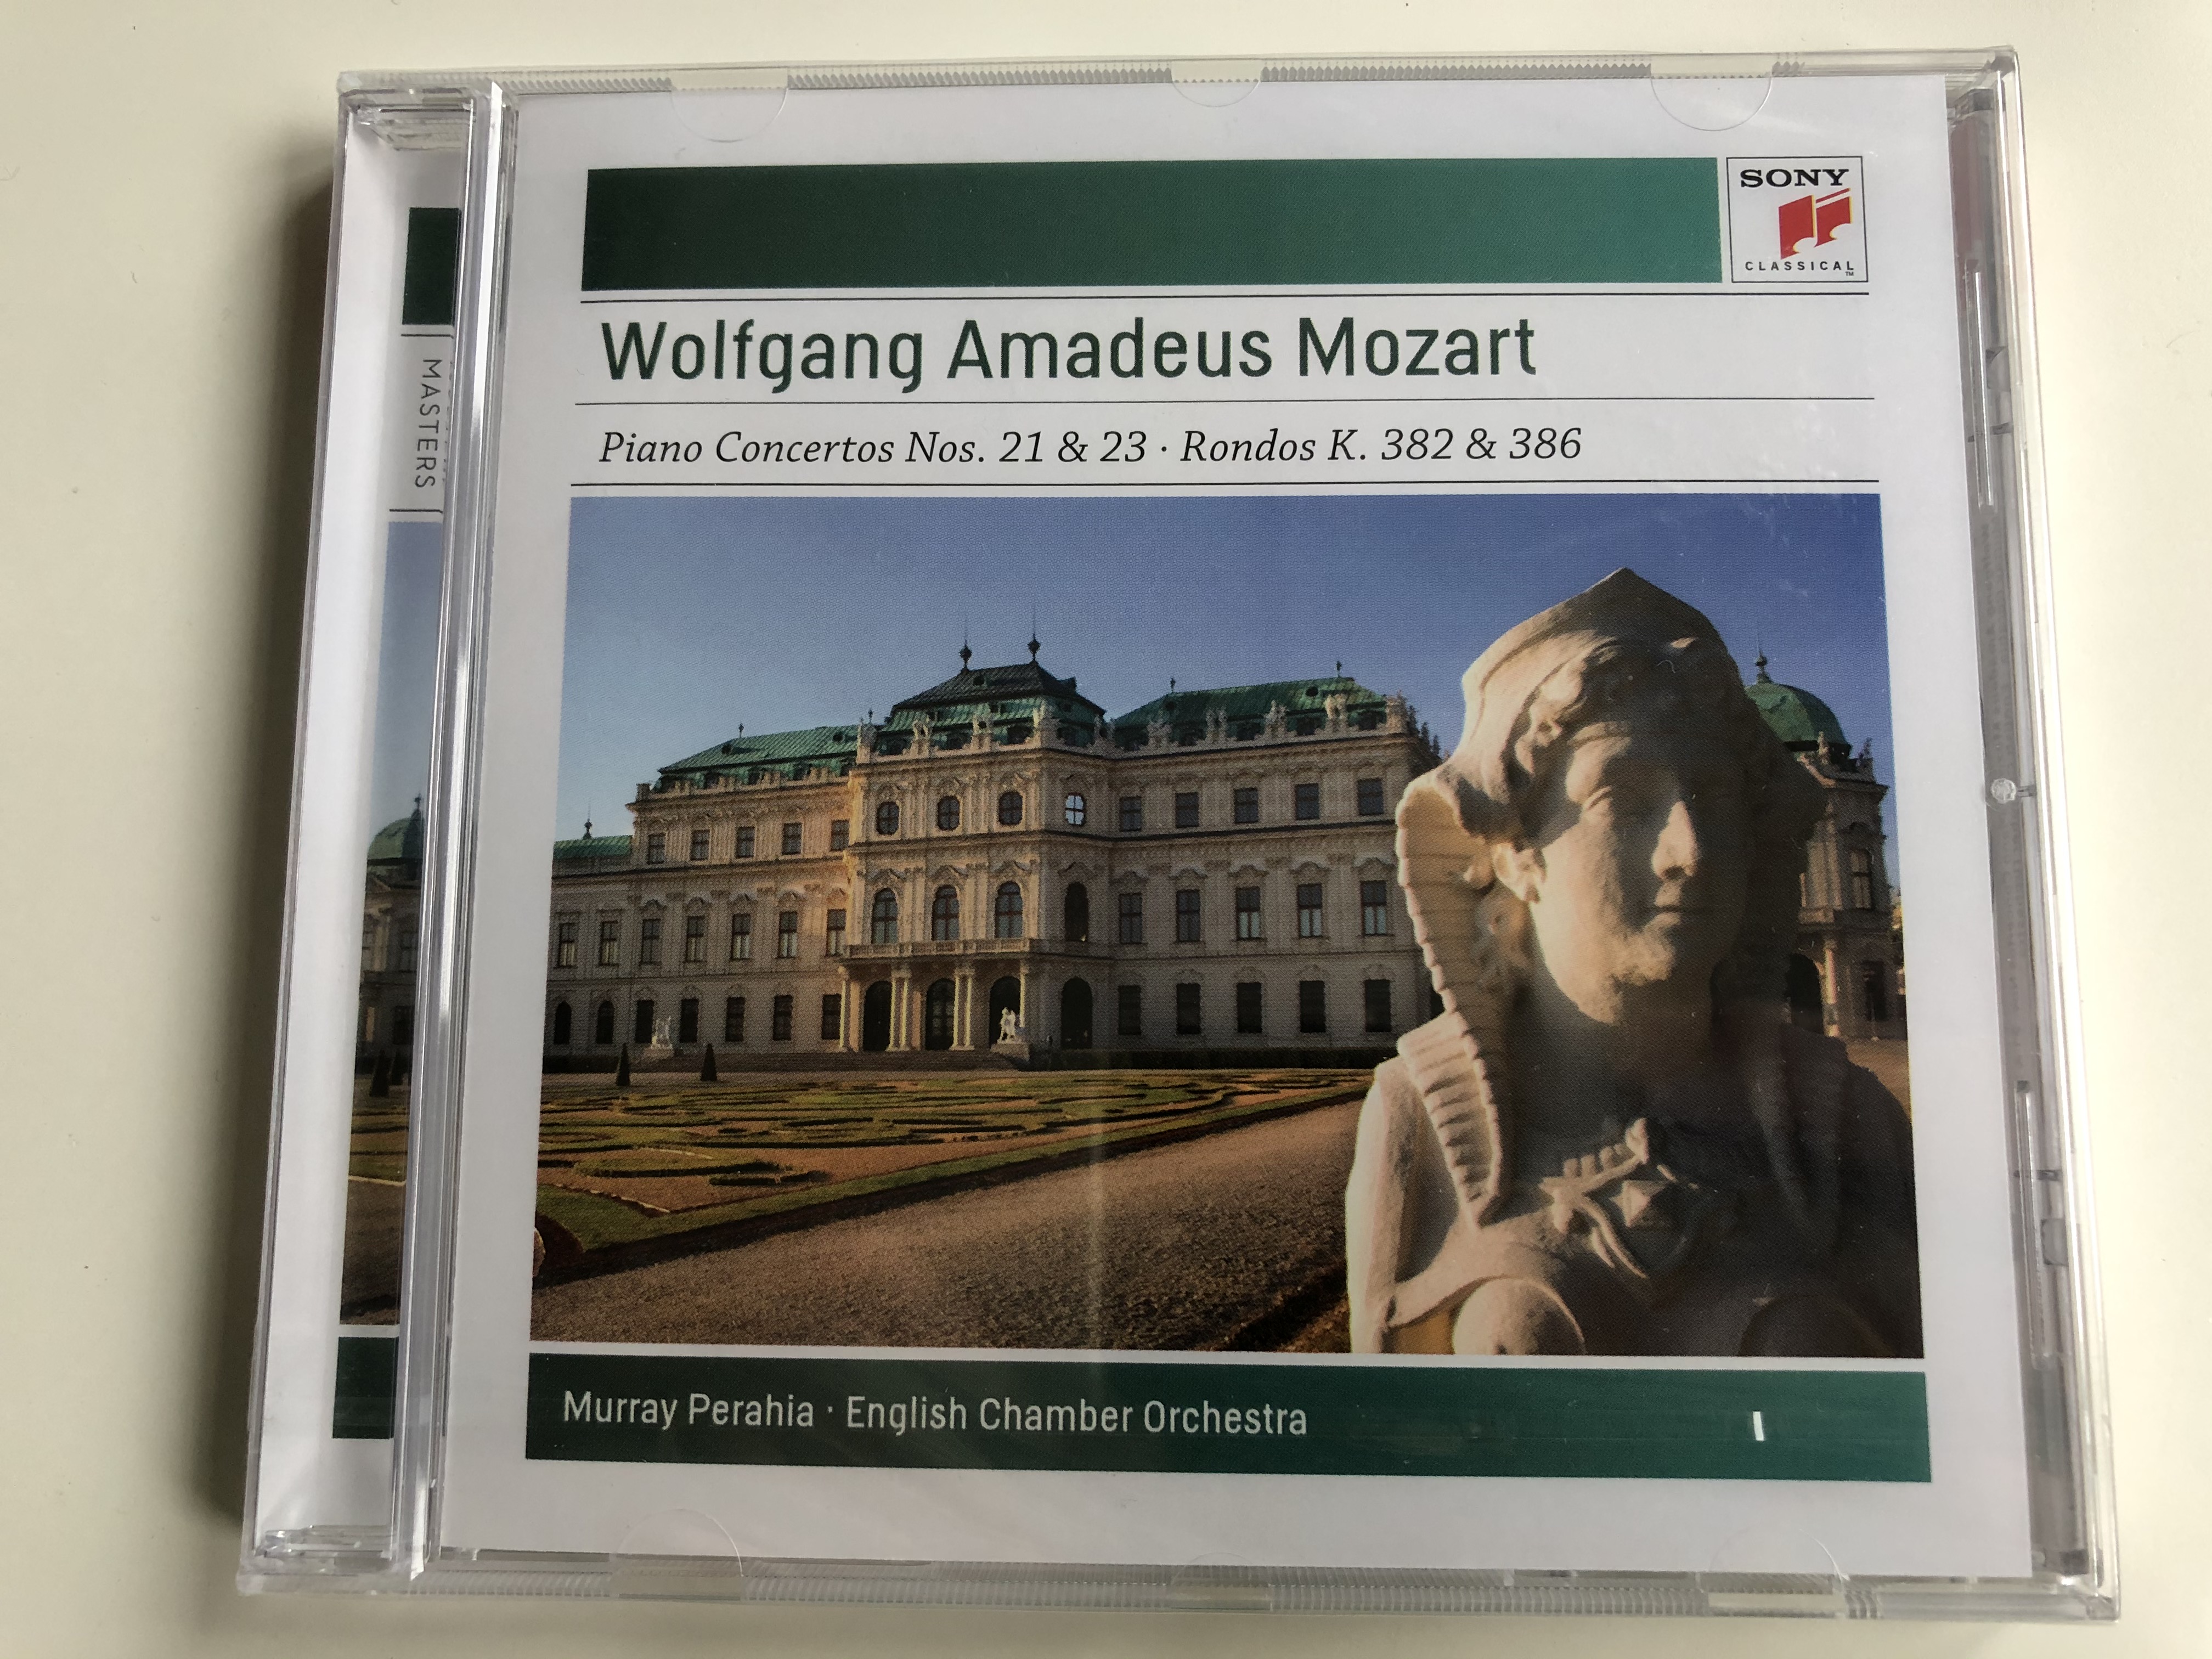 wolfgang-amadeus-mozart-piano-concertos-nos.-21-23-rondos-k.-382-386-murray-perahia-english-chamber-orchestra-sony-classical-audio-cd-2010-88697757852-1-.jpg